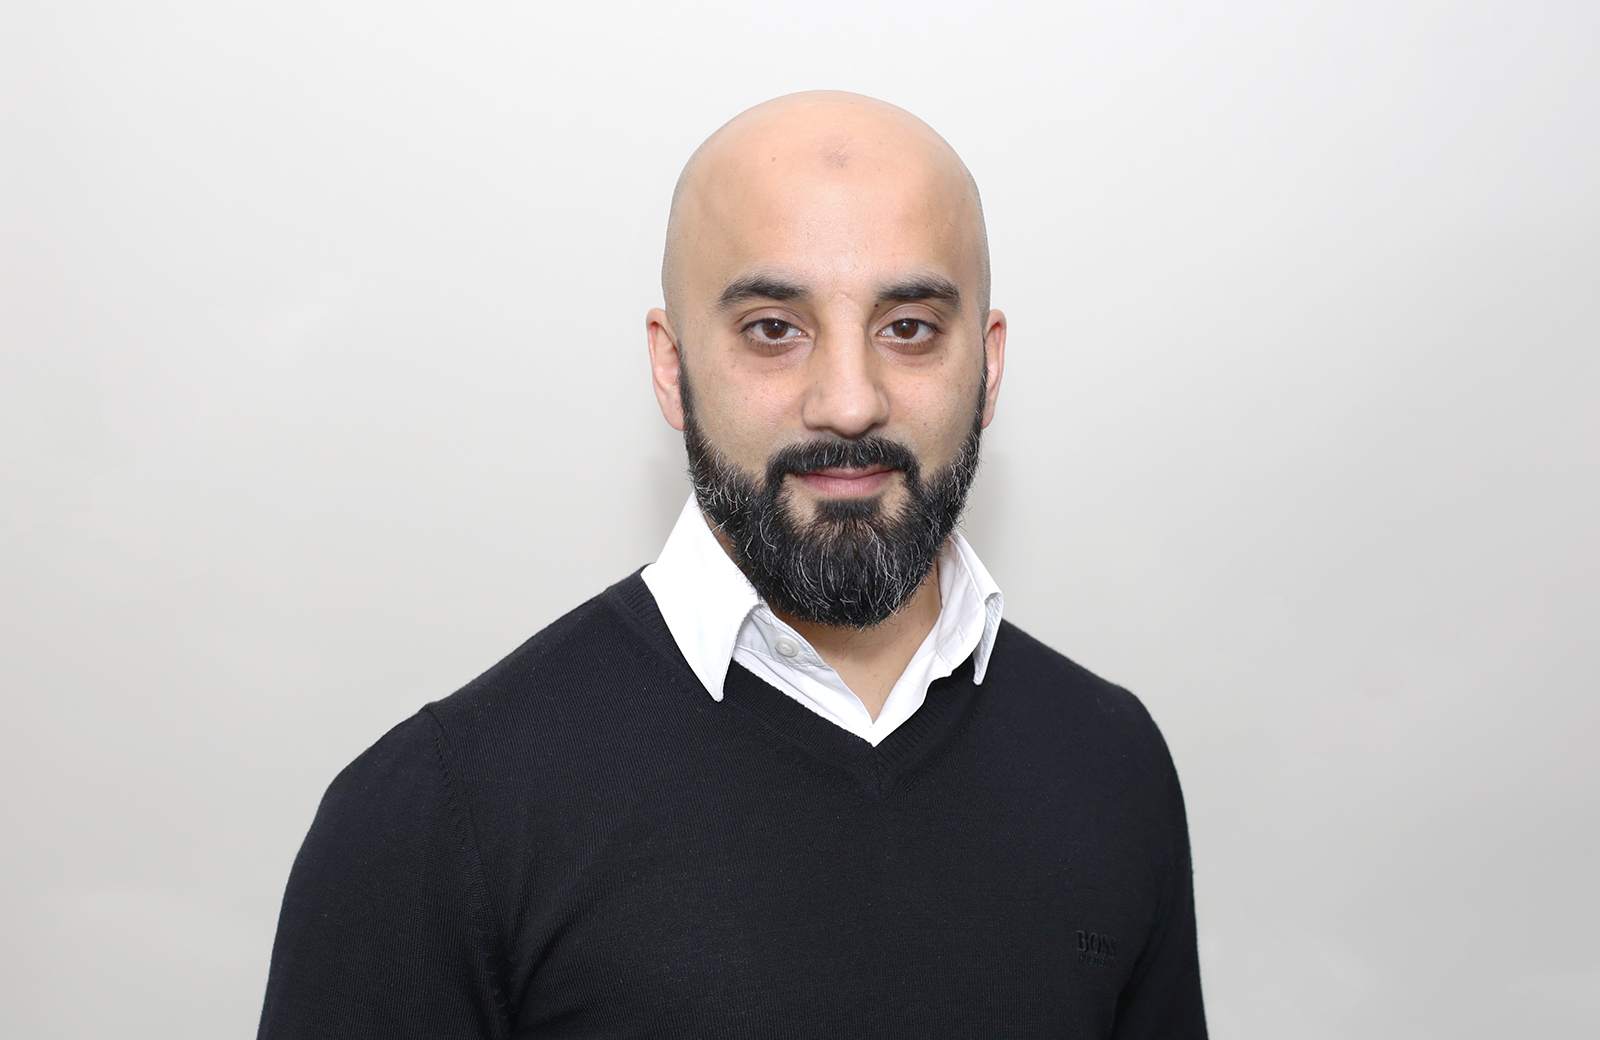 Tufail Hussain, Director of Islamic Relief UK